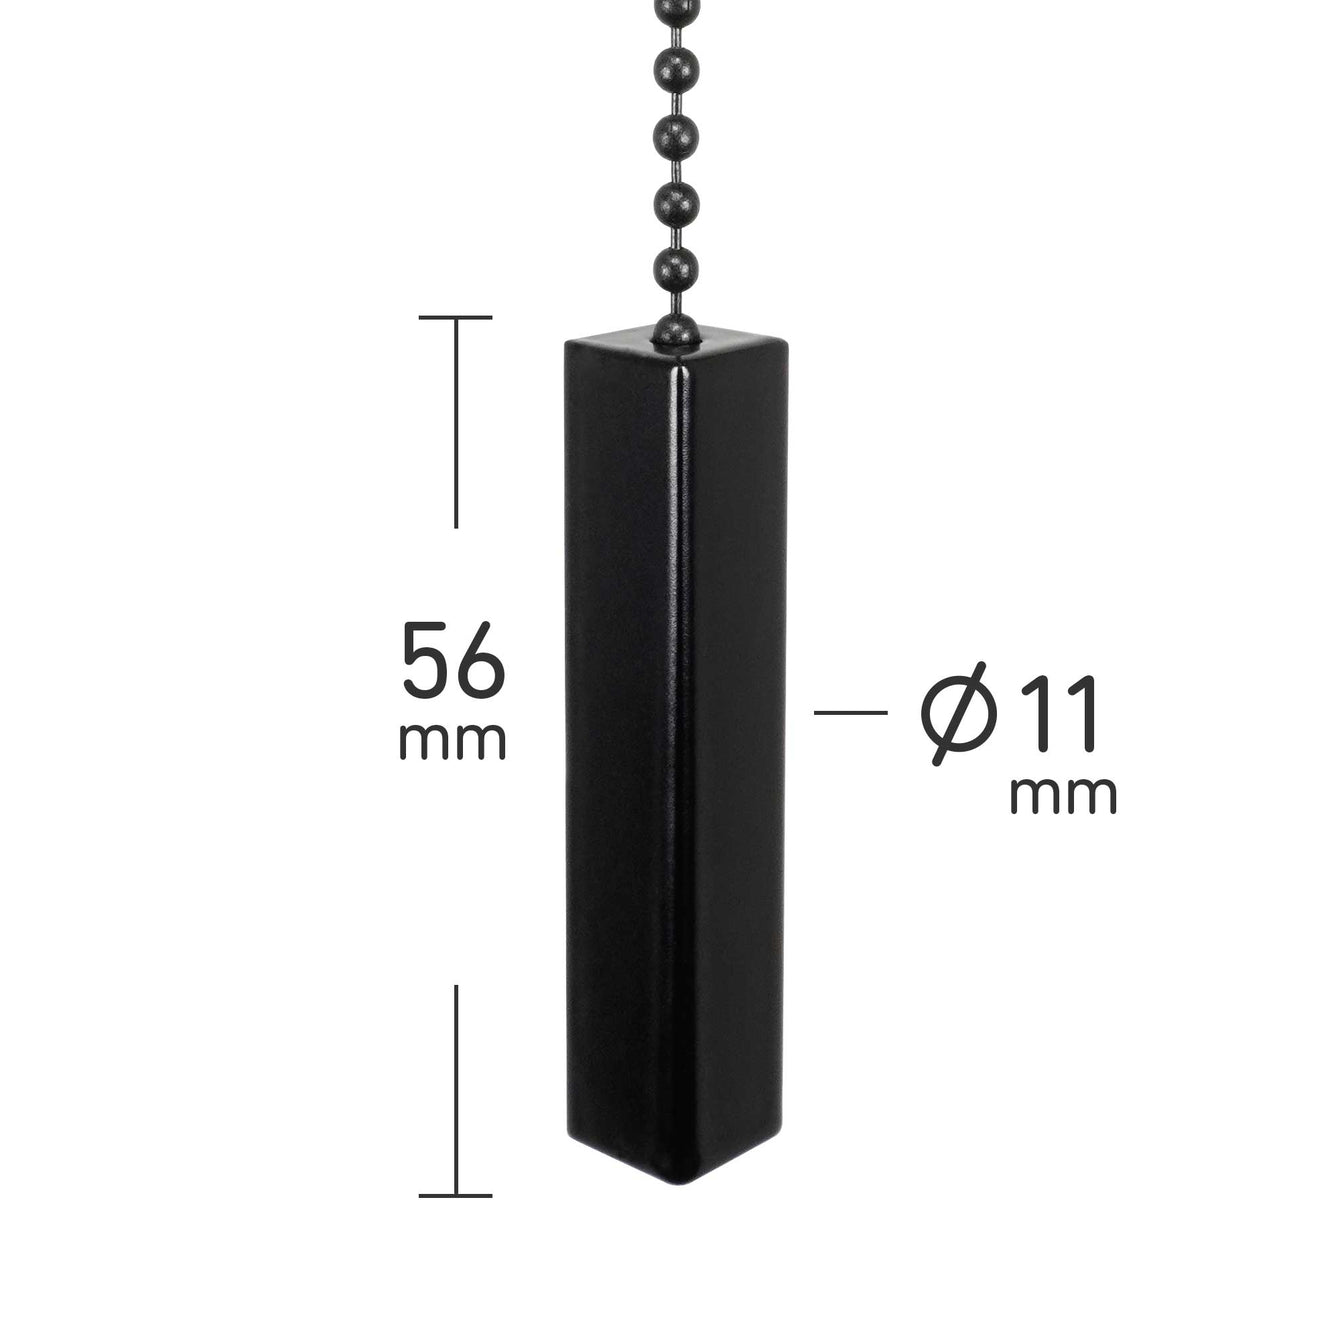 ElekTek Premium Brass Bathroom Light Pull Cord Switch Kit with Pull Chain Handle Black Cylinder / Brass